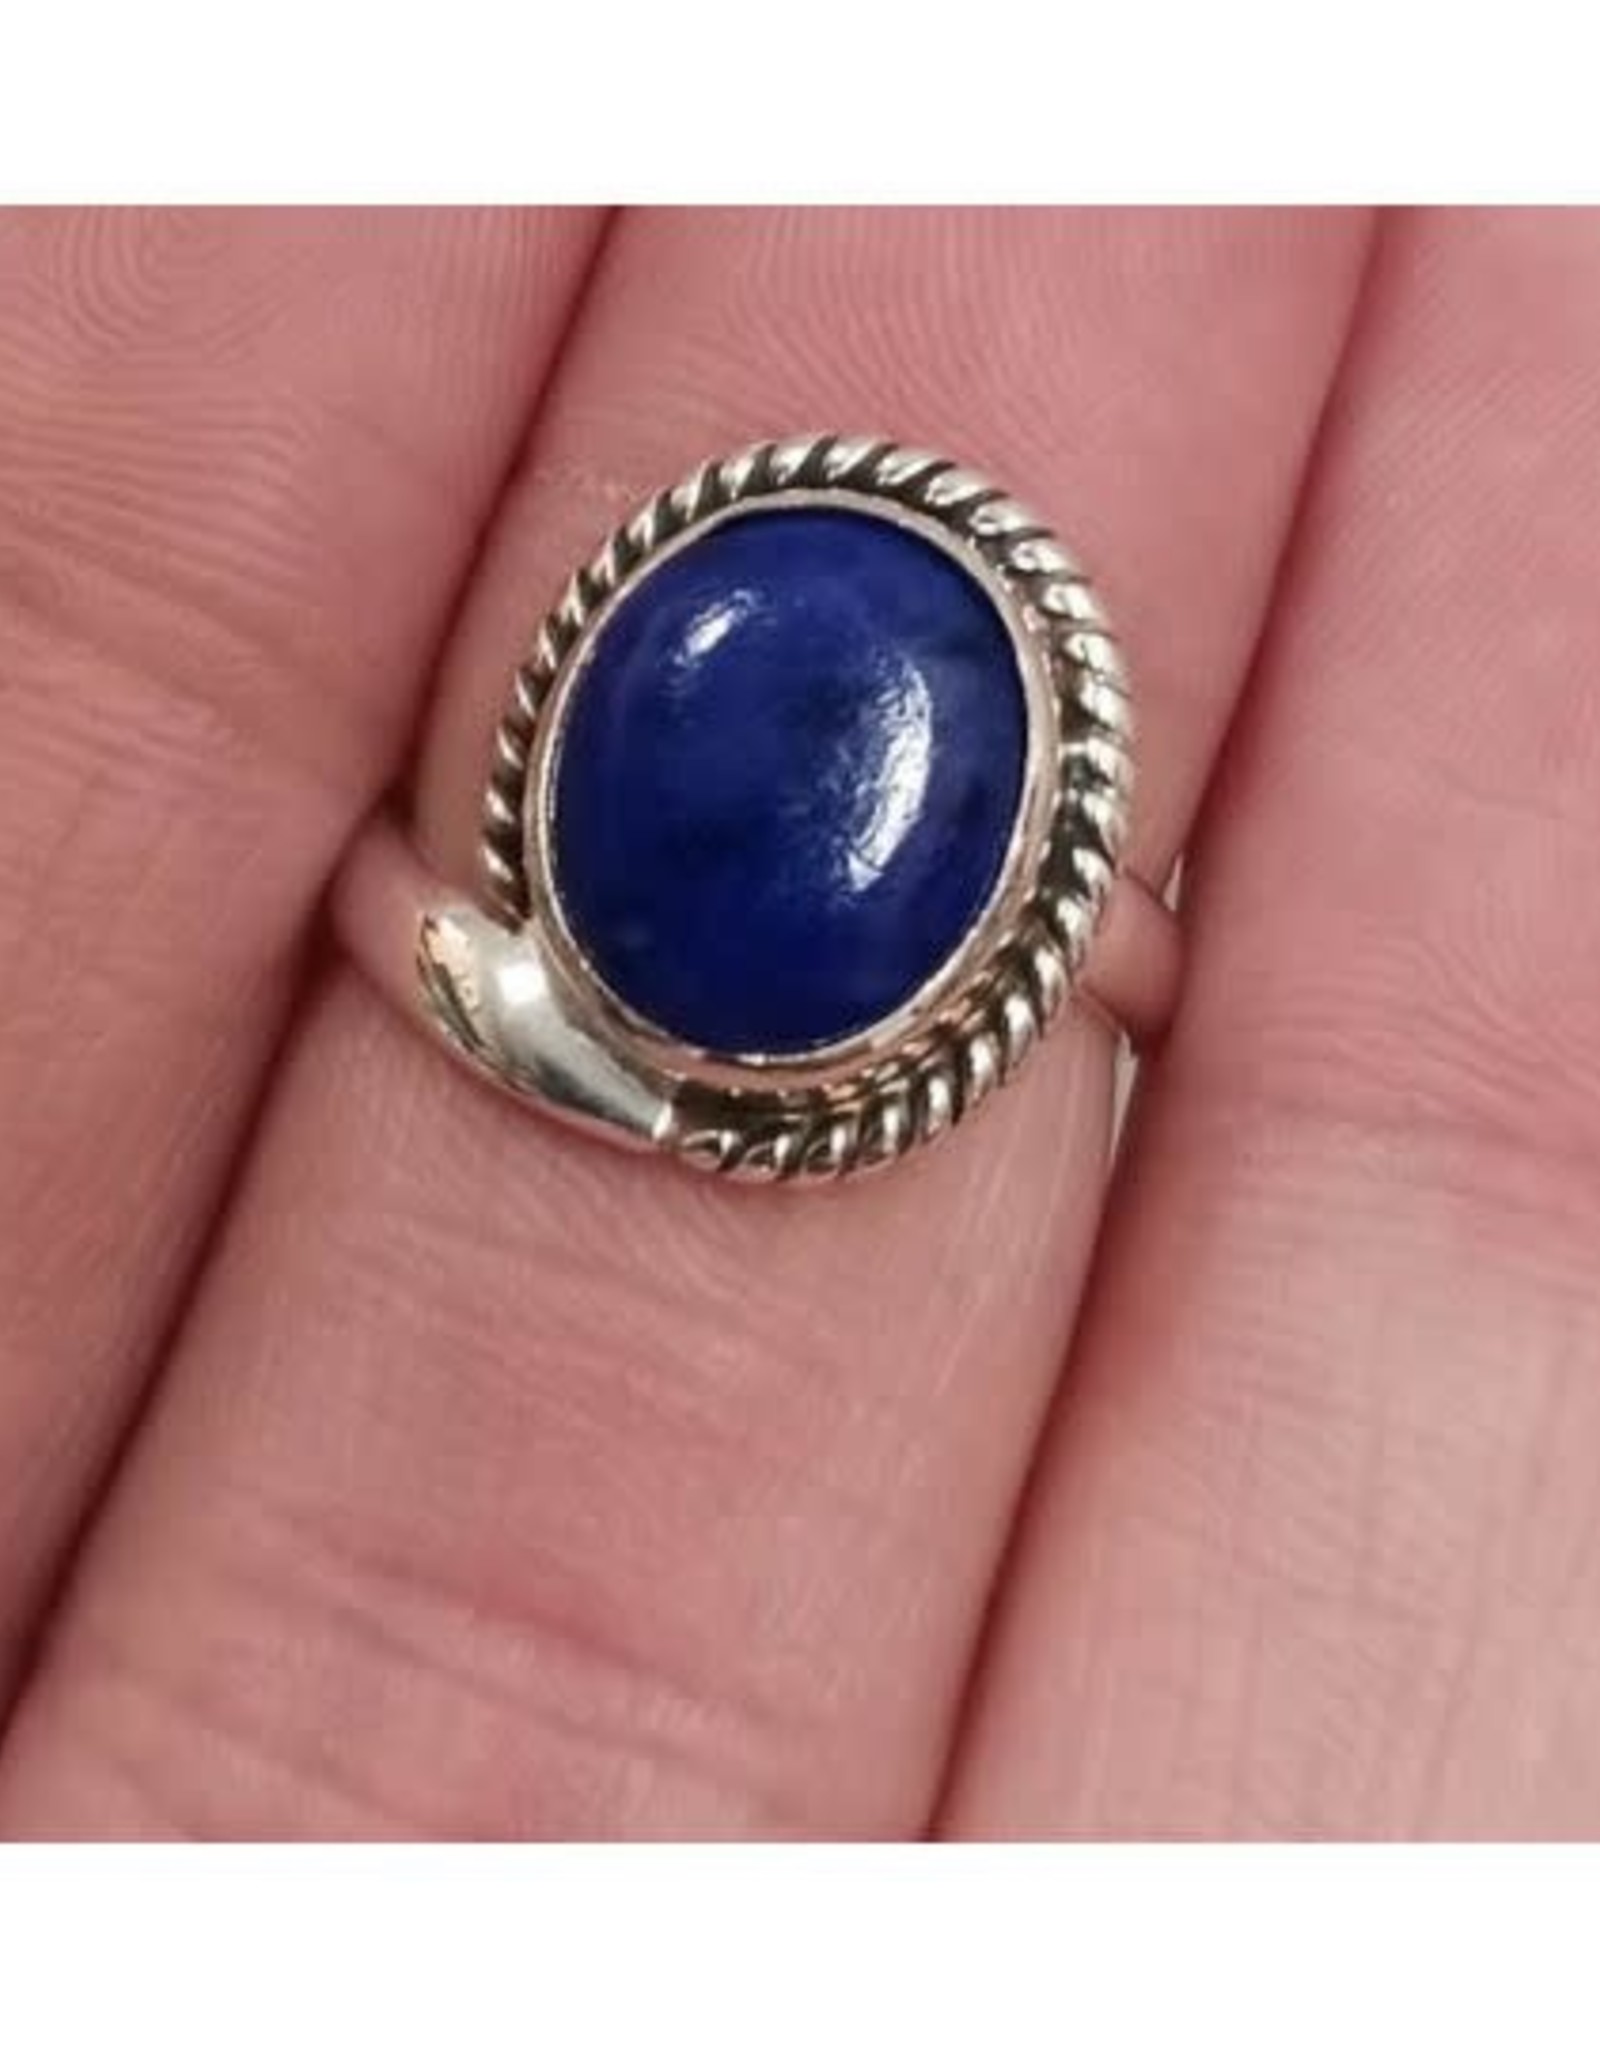 Lapis Lazuli Ring - Size 7 Sterling Silver